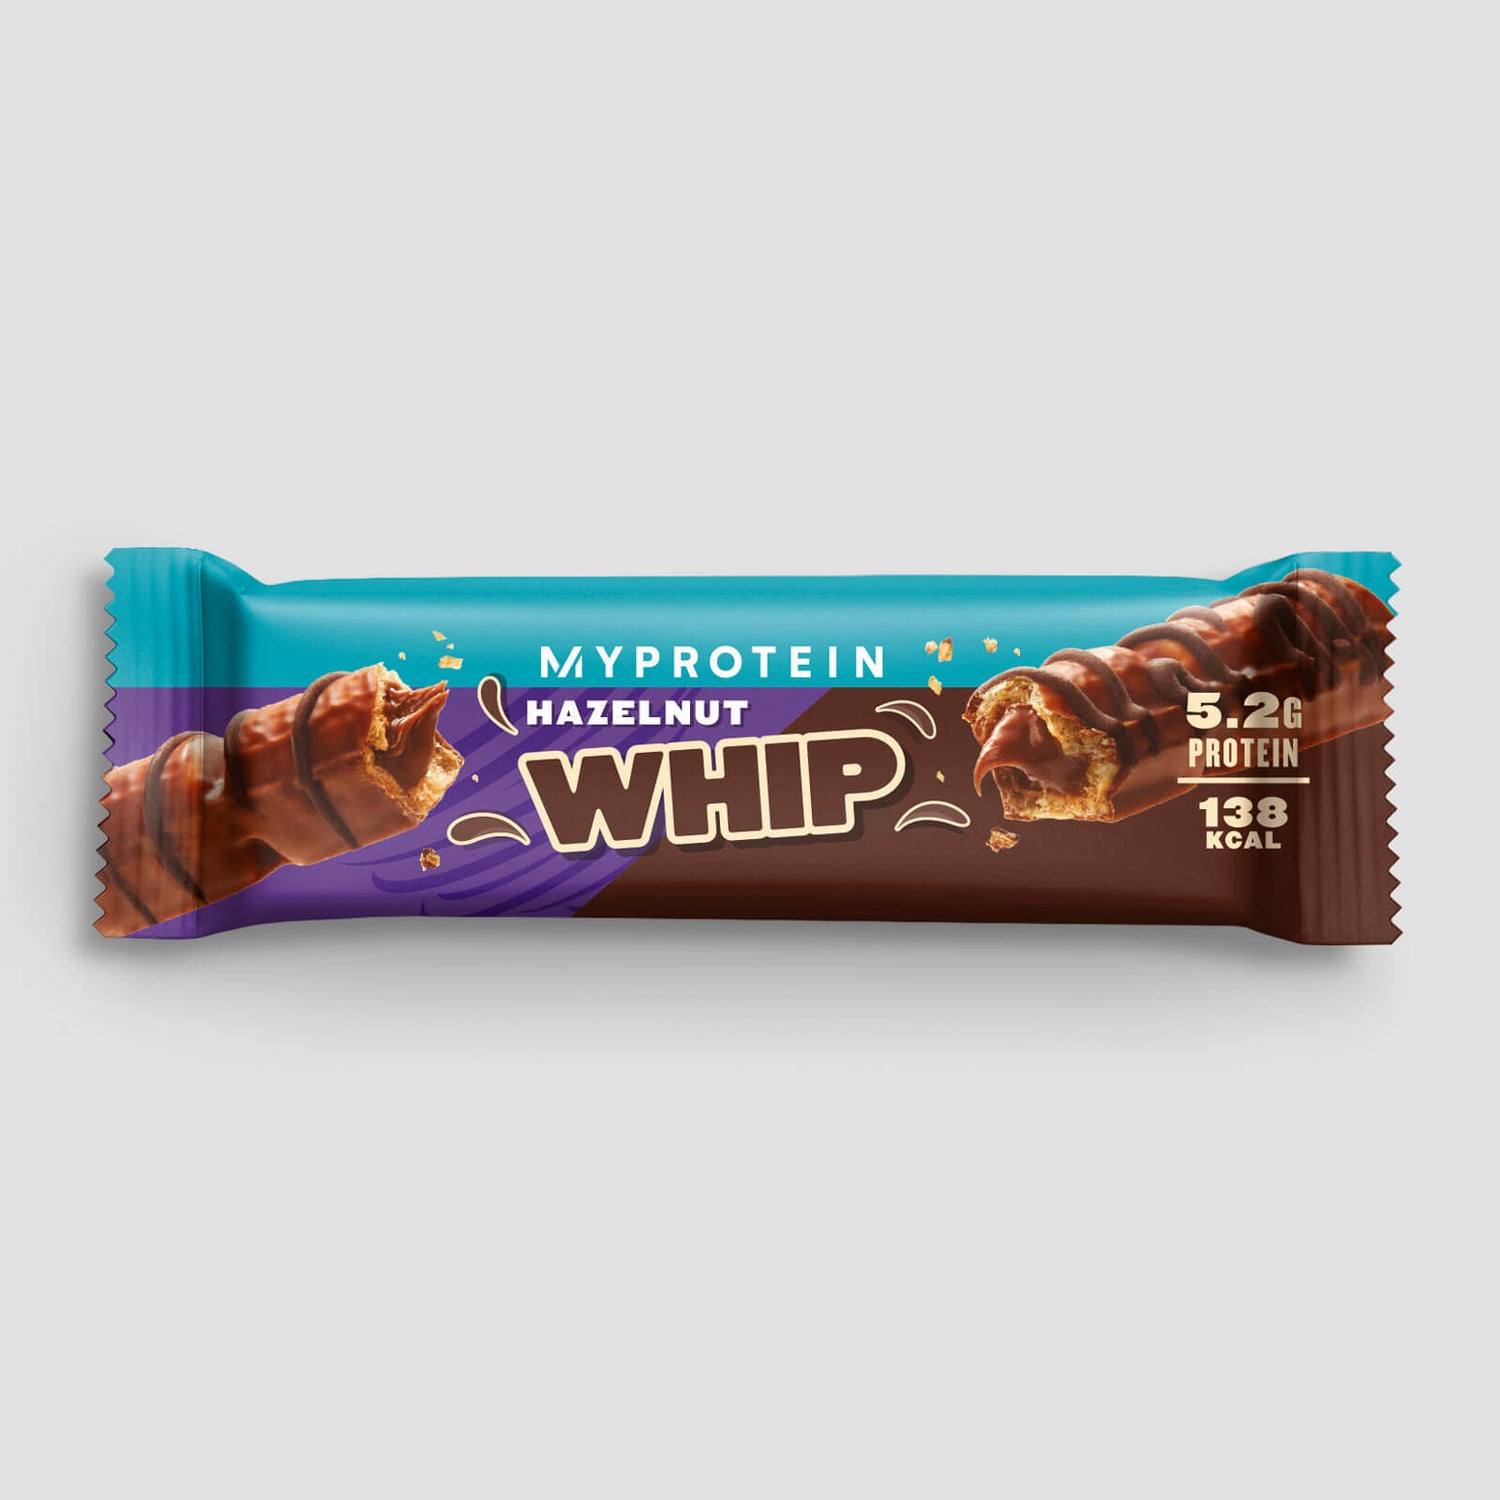 Myprotein Hazelnut Whip (Sample) - 24g - Pieninio šokolado